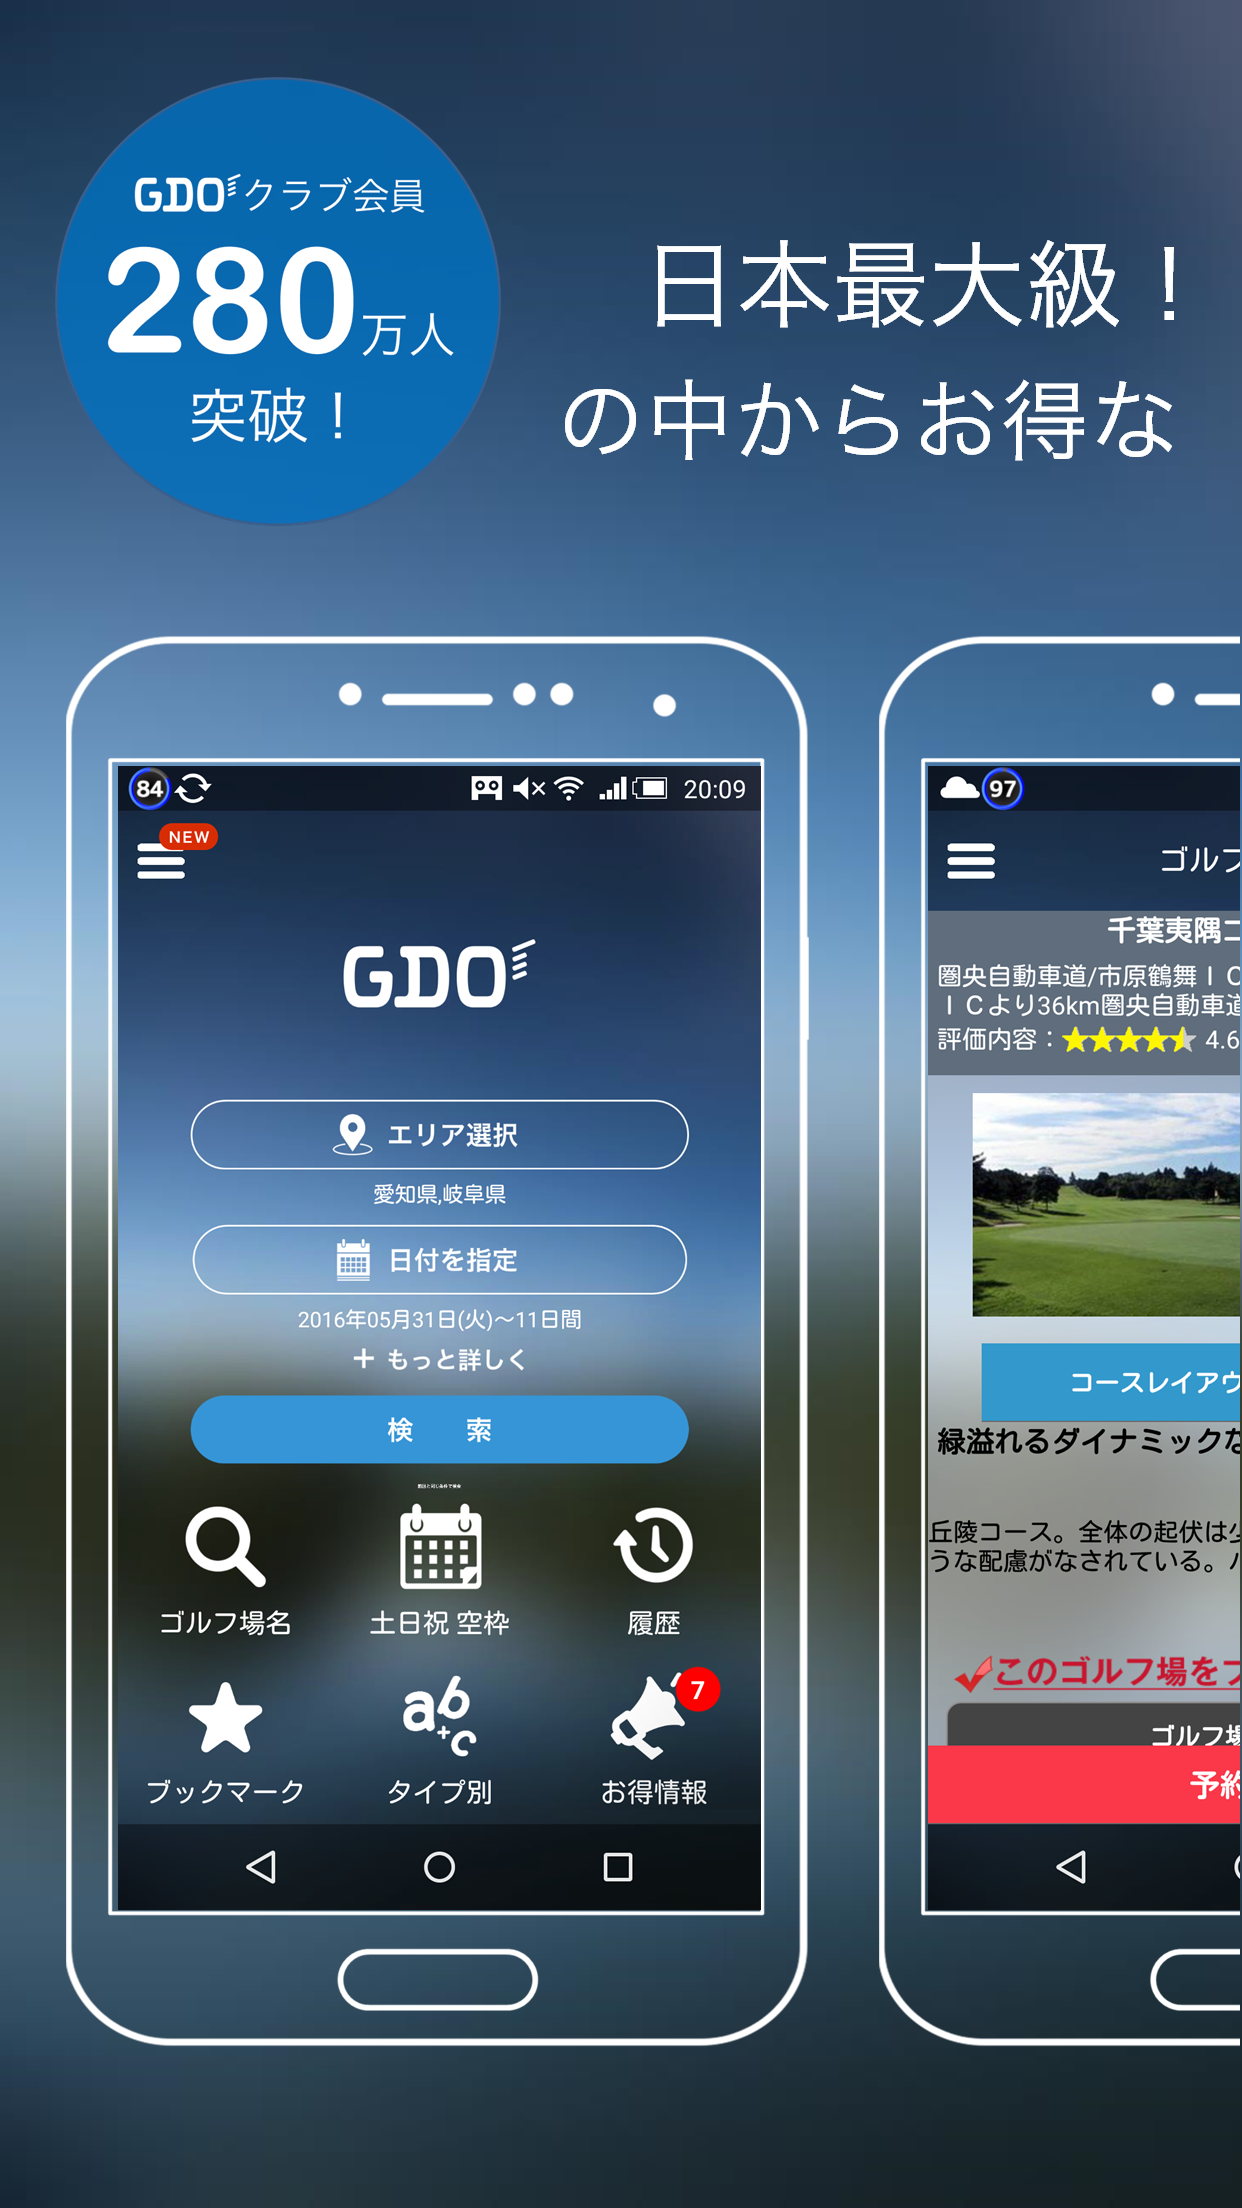 Android application ゴルフ場予約 GDO (ゴルフダイジェスト・オンライン) ゴルフの検索・予約はアプリで！ screenshort